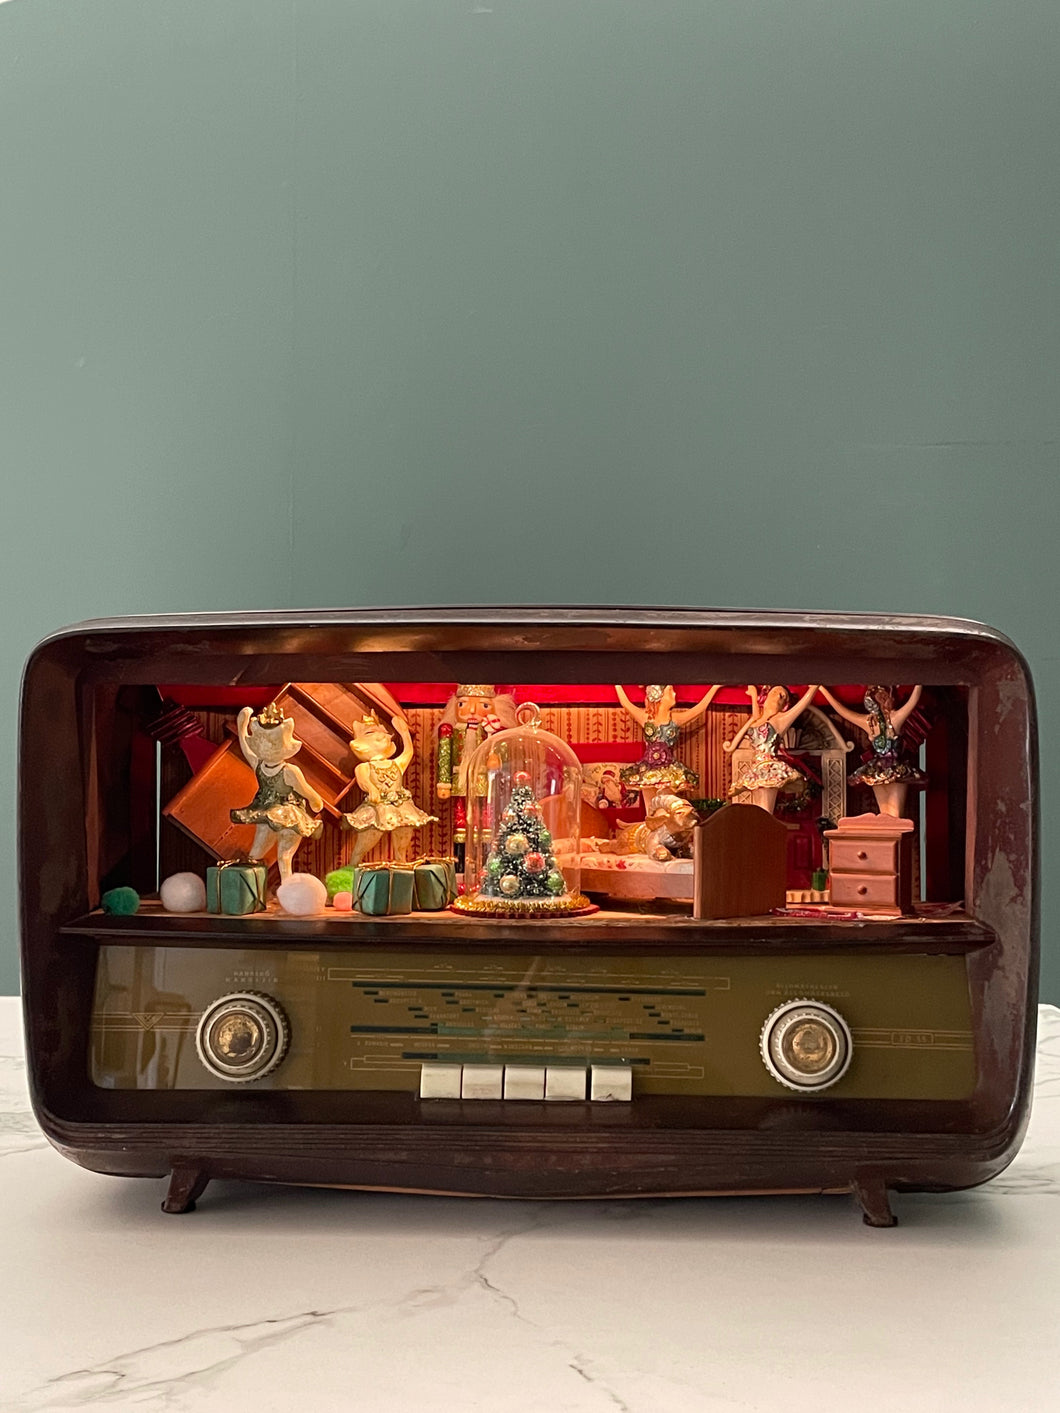 Vintage Radio with Christmas Decoration